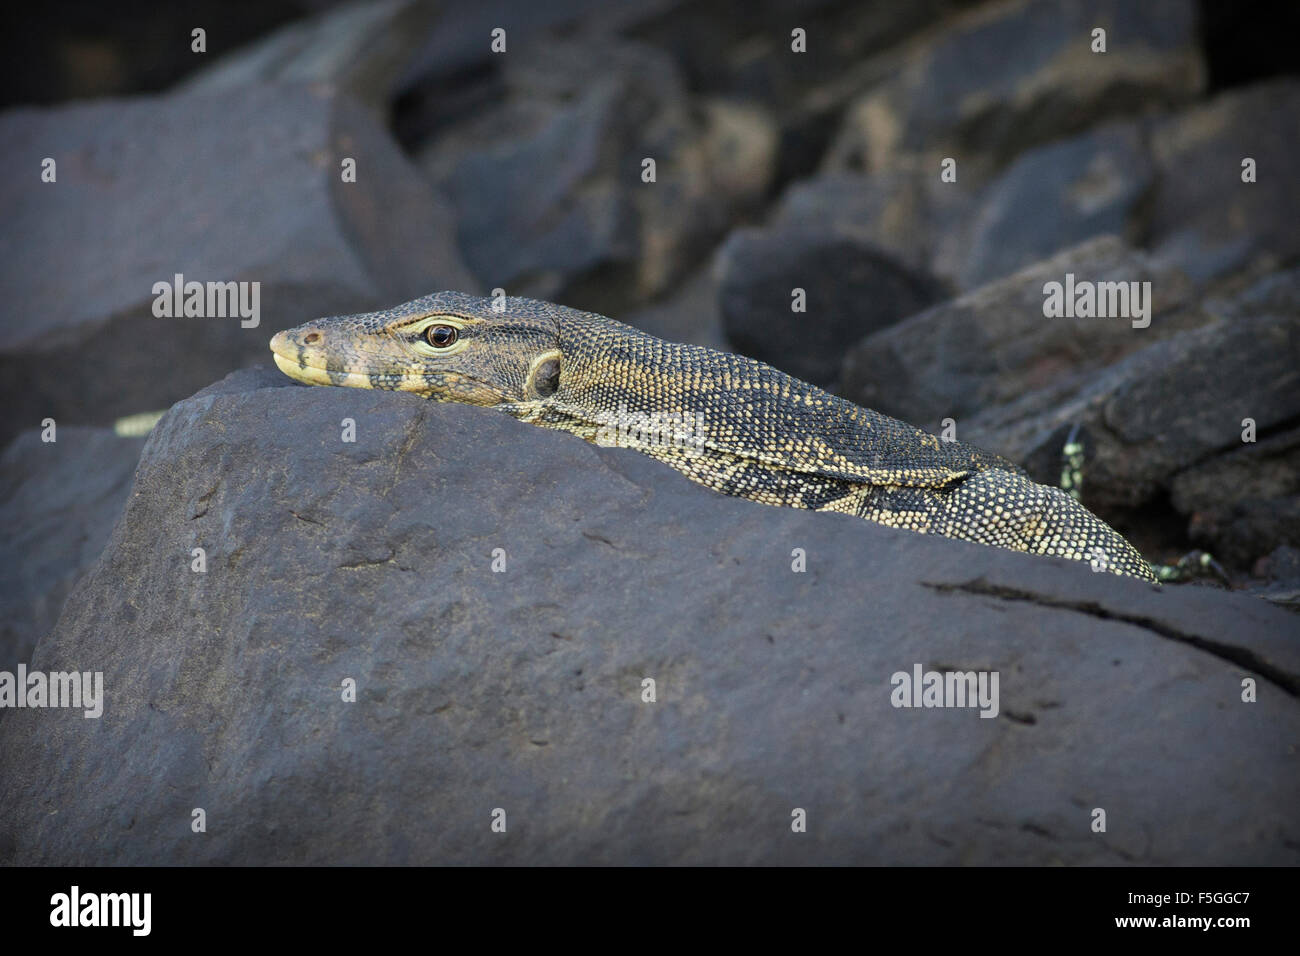 Wild water monitor lizard on the banks of the Kinabatangan river in Borneo Stock Photo